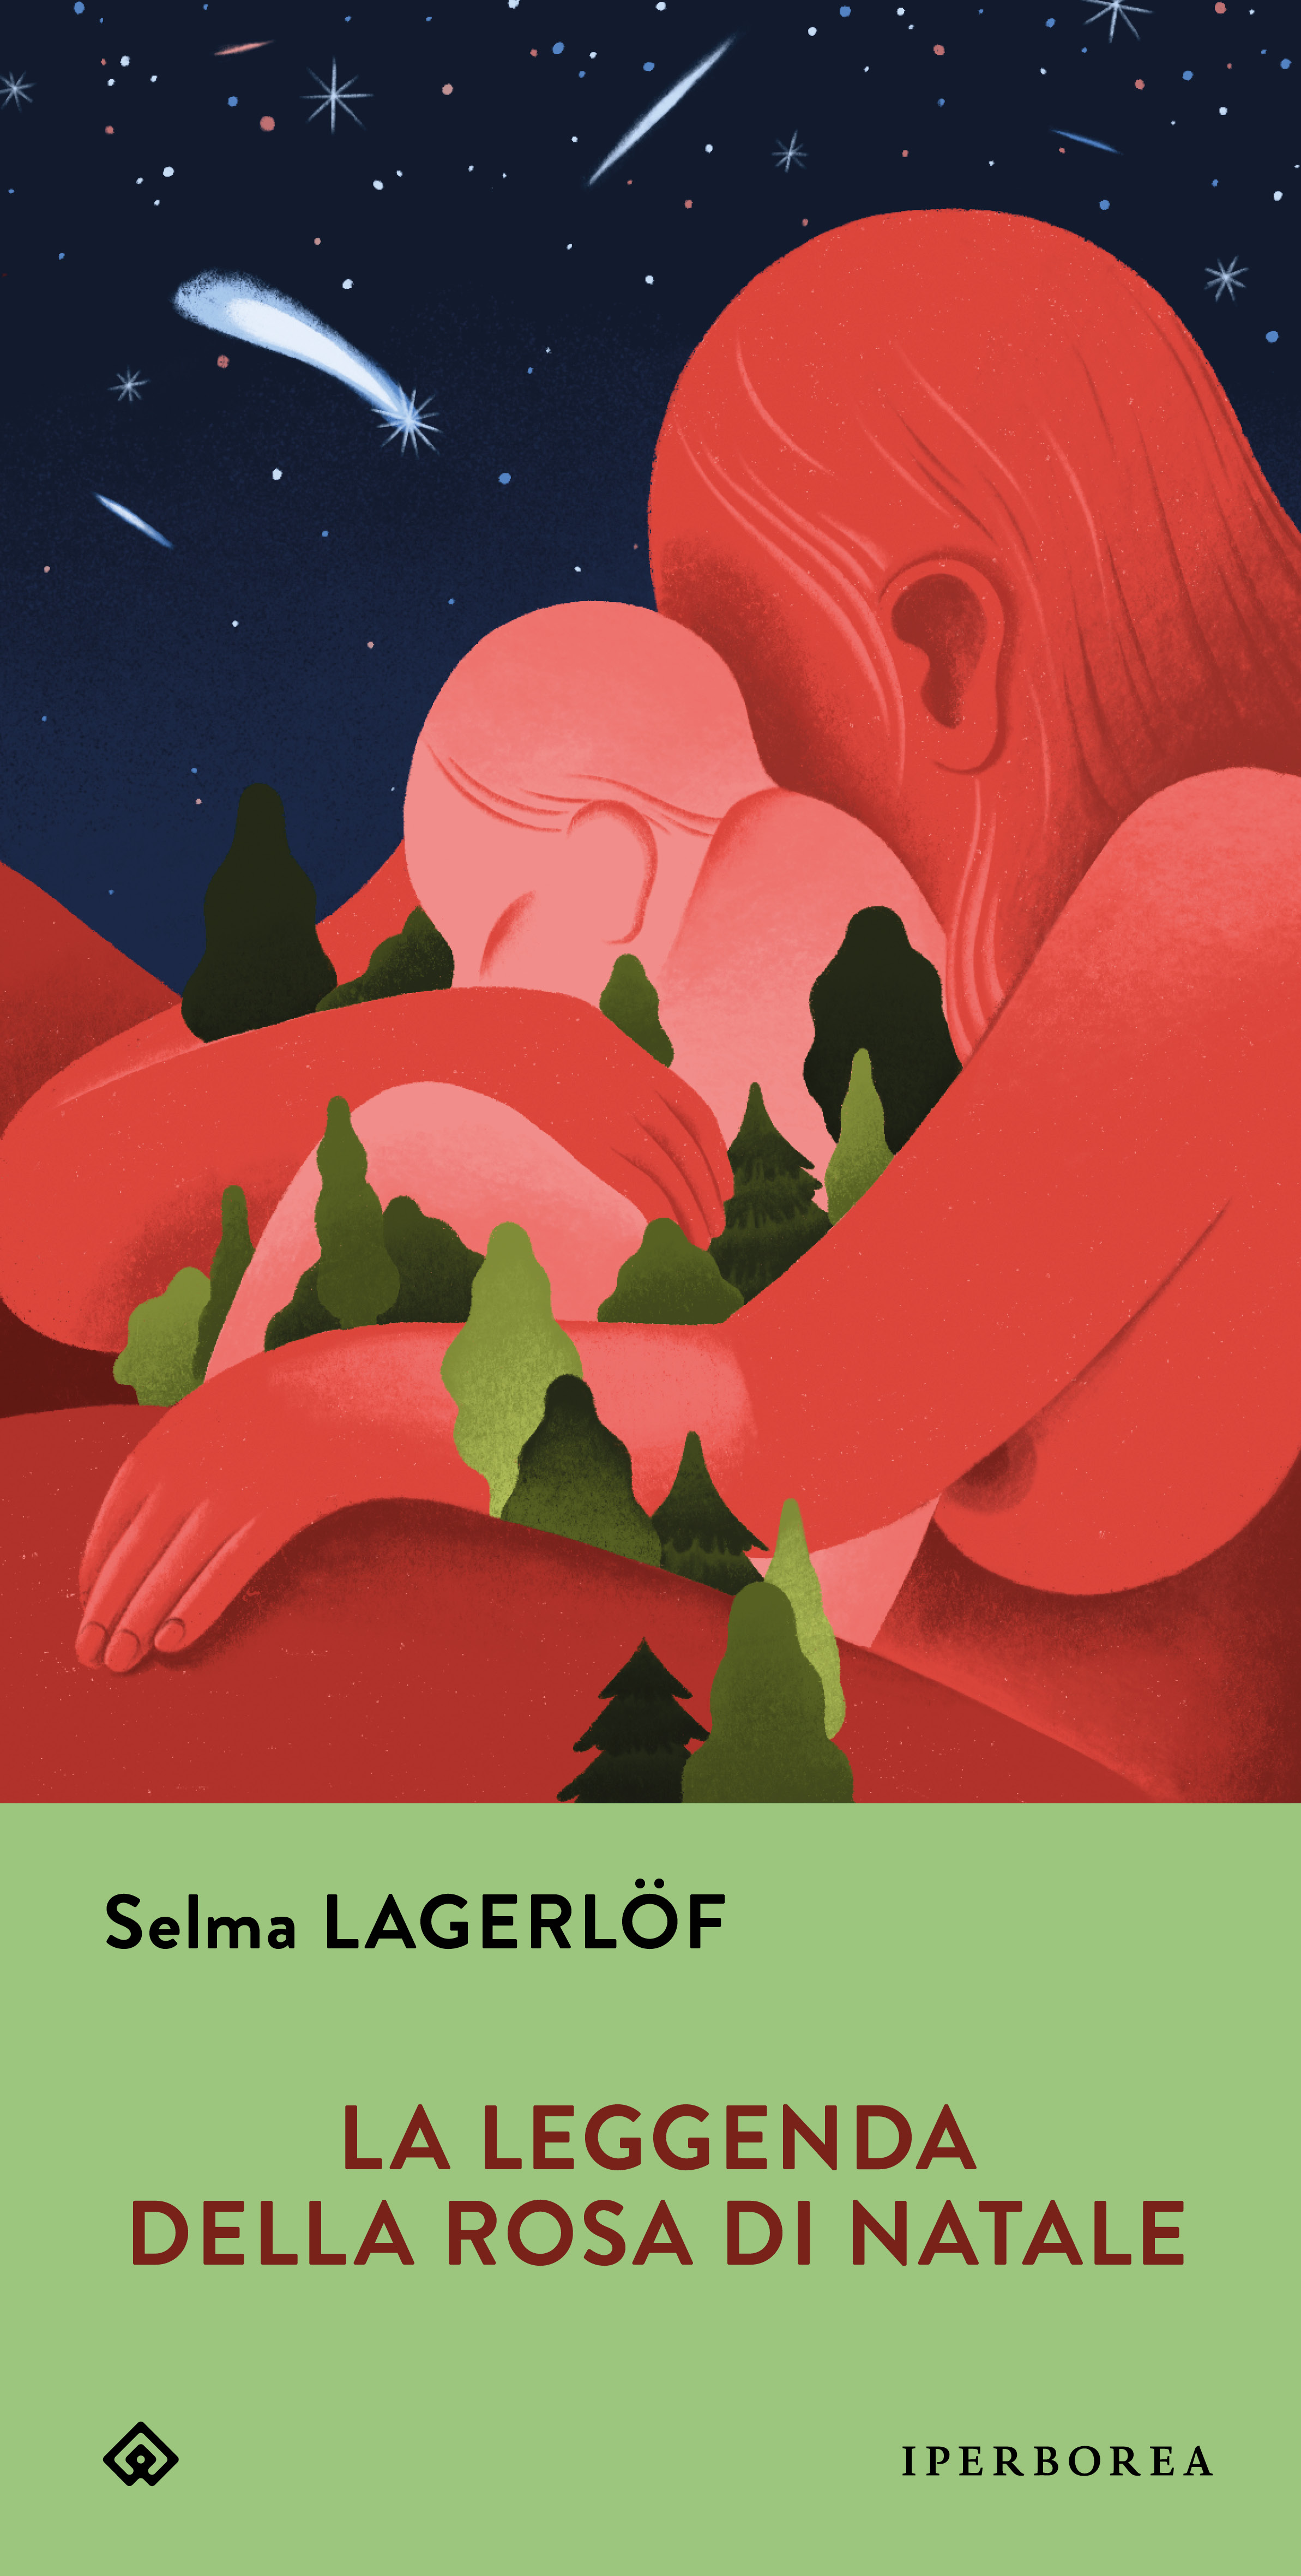 La leggenda della rosa di Natale - Selma Lagerlöf - Iperborea